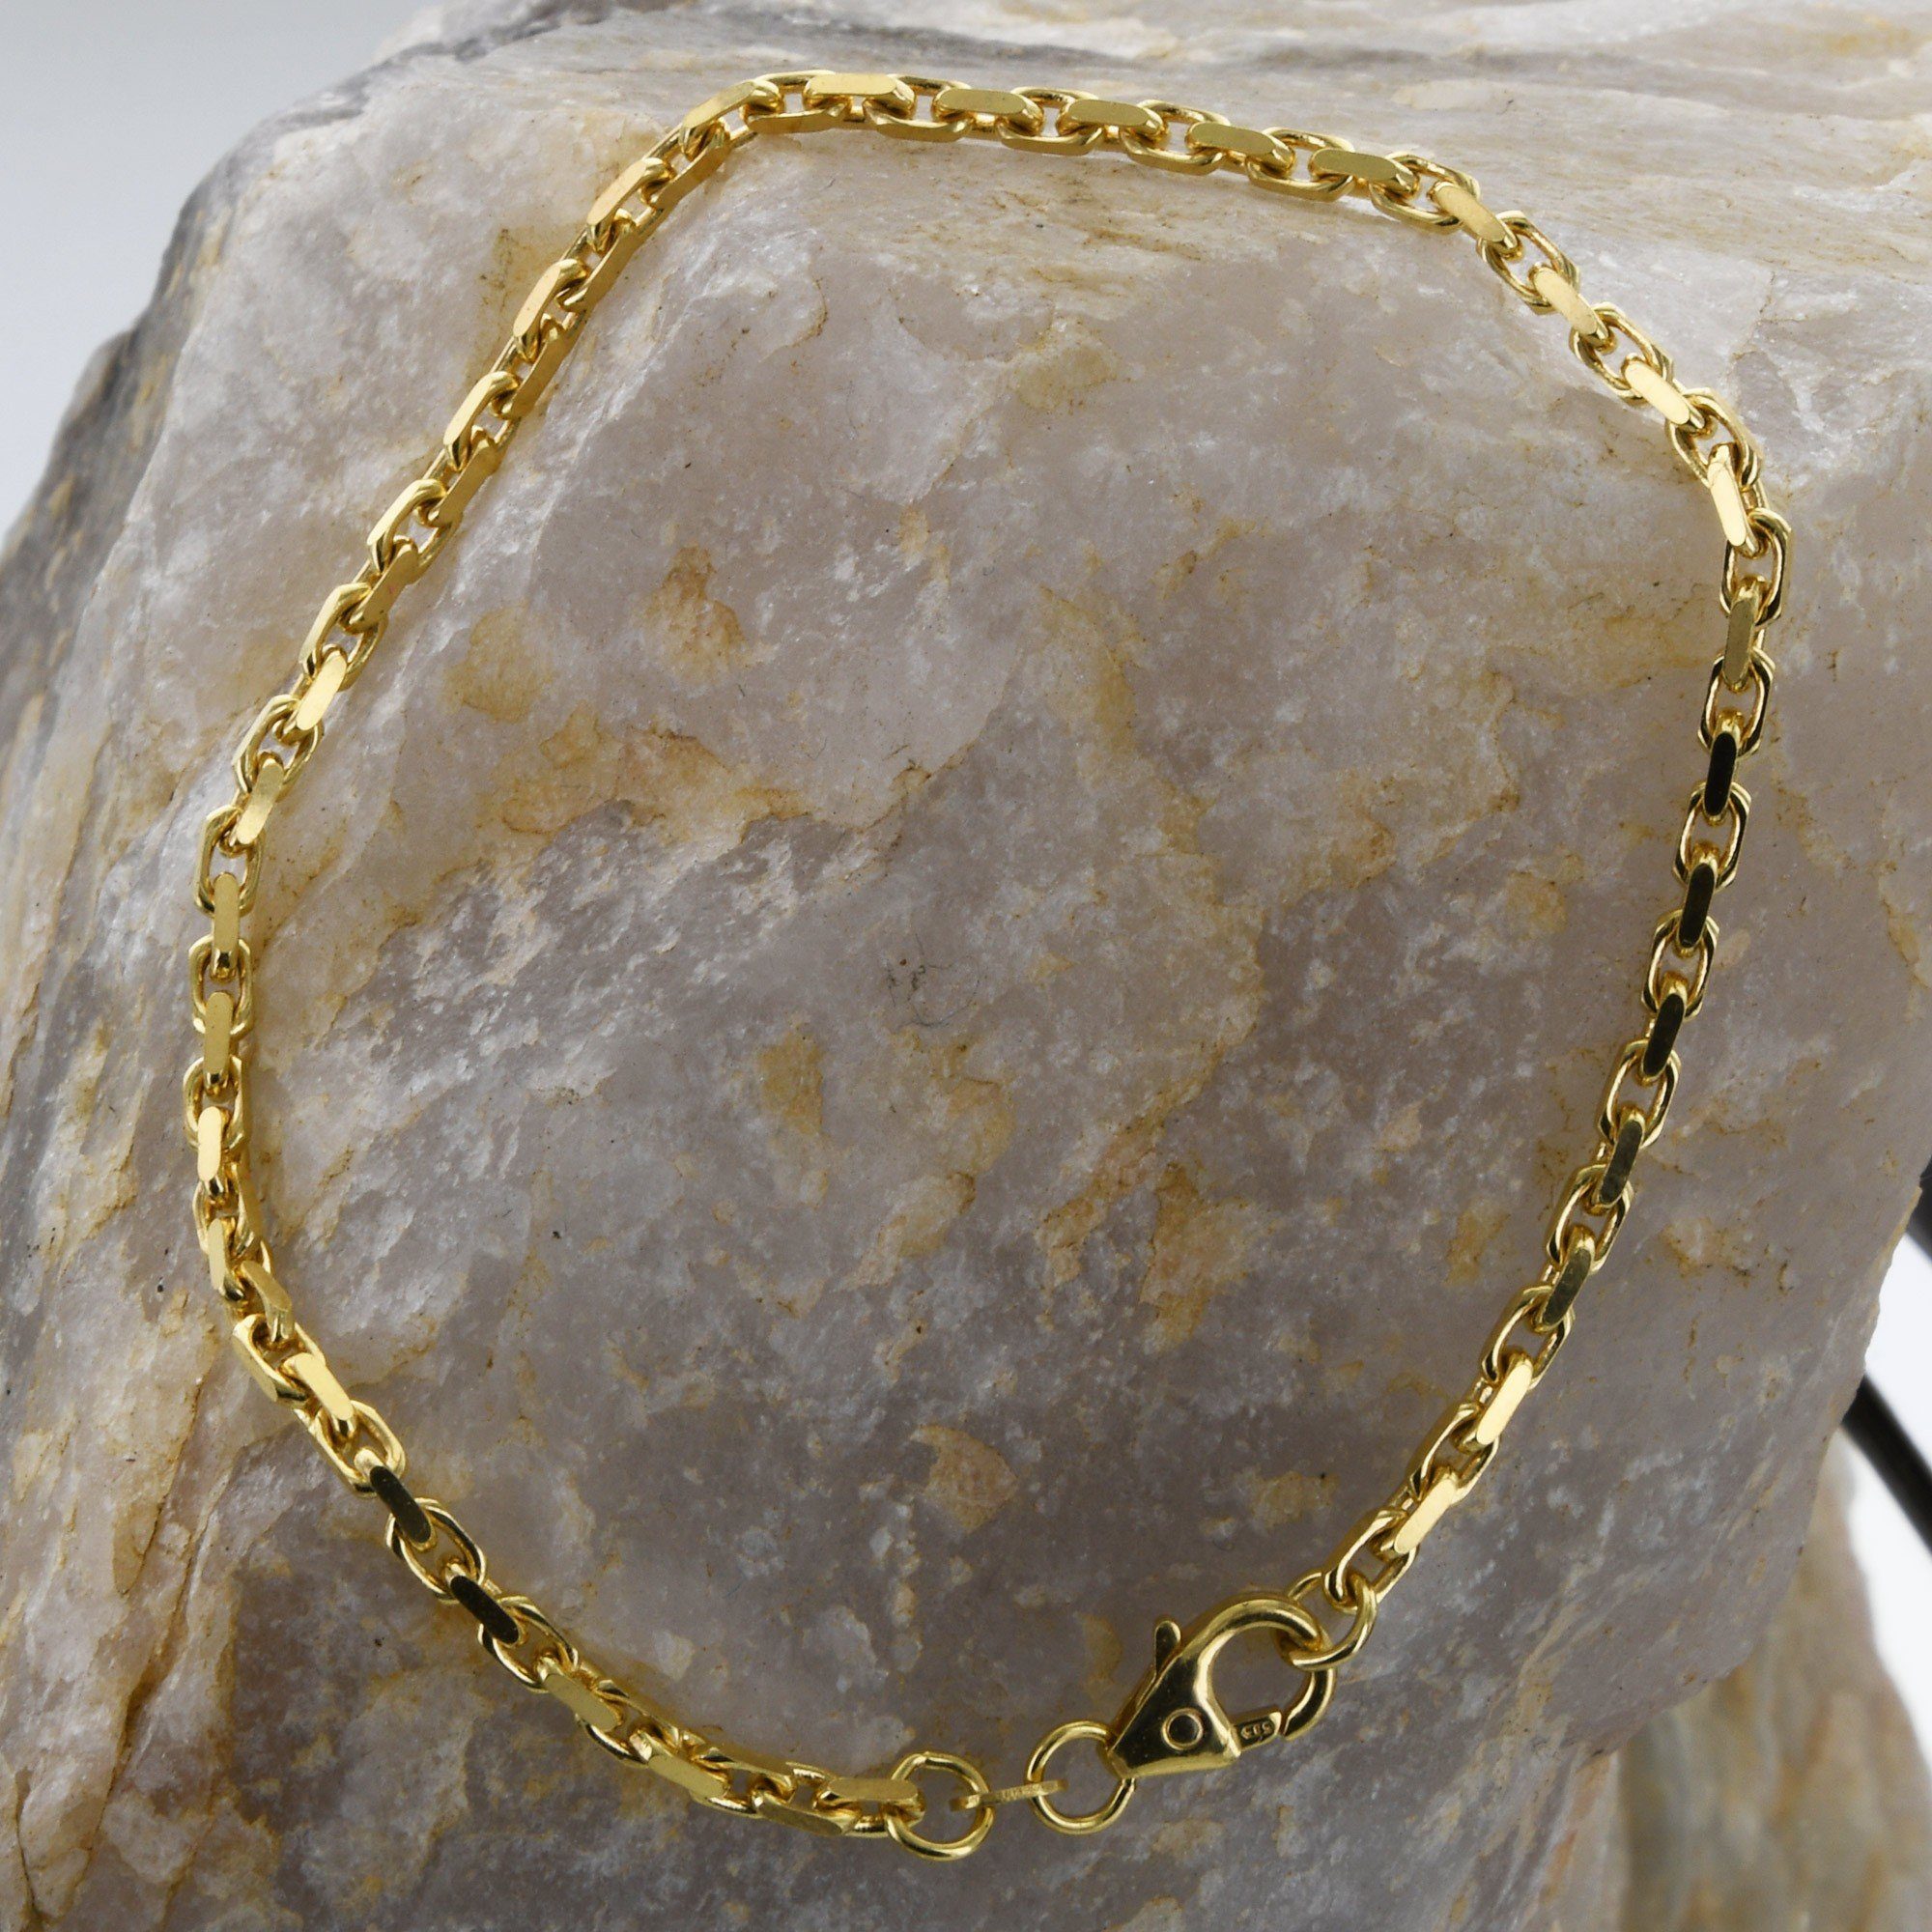 HOPLO Goldarmband Ankerkette diamantiert Длина 18,5cm - Breite 2,0mm - 333-8 Karat Gold